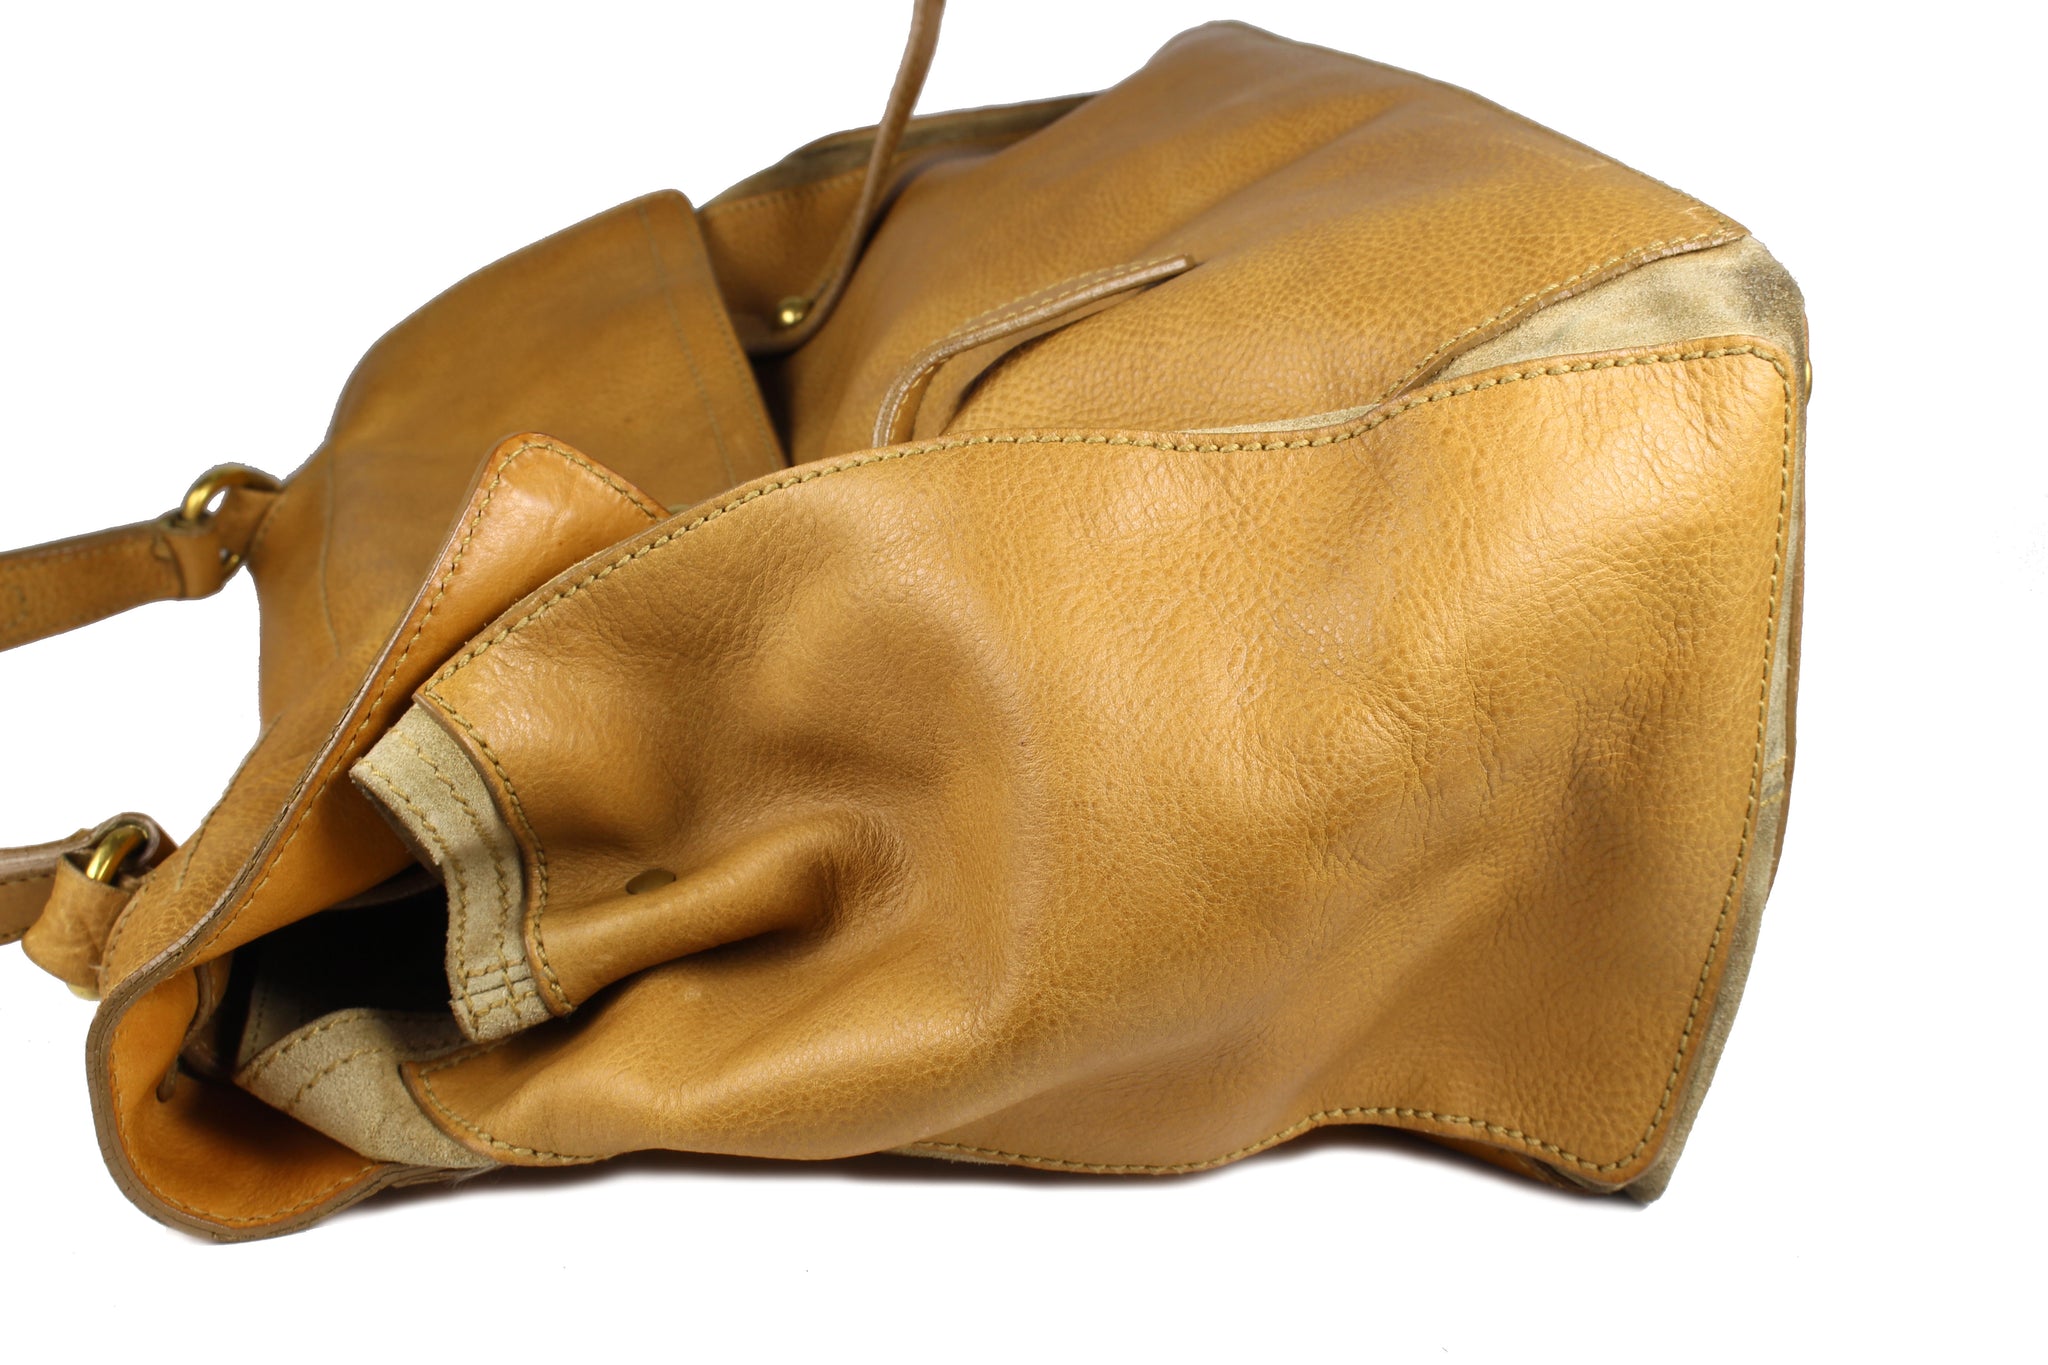 Yves Saint Laurent Muse Two Tote - Metallic Totes, Handbags